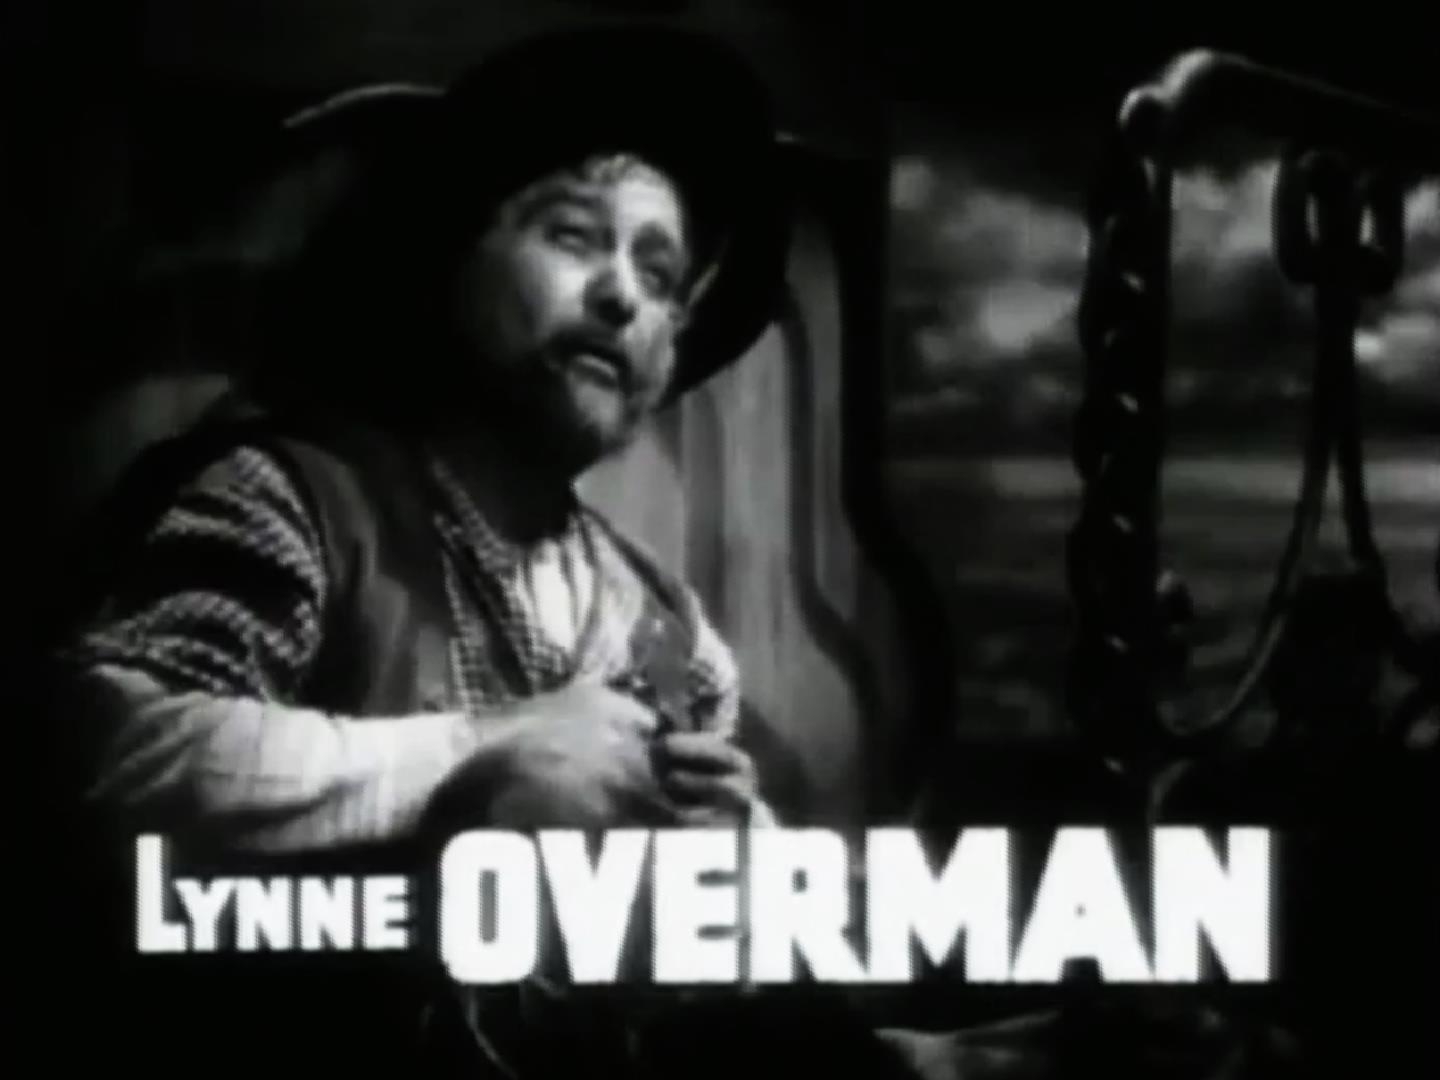 Lynne Overman